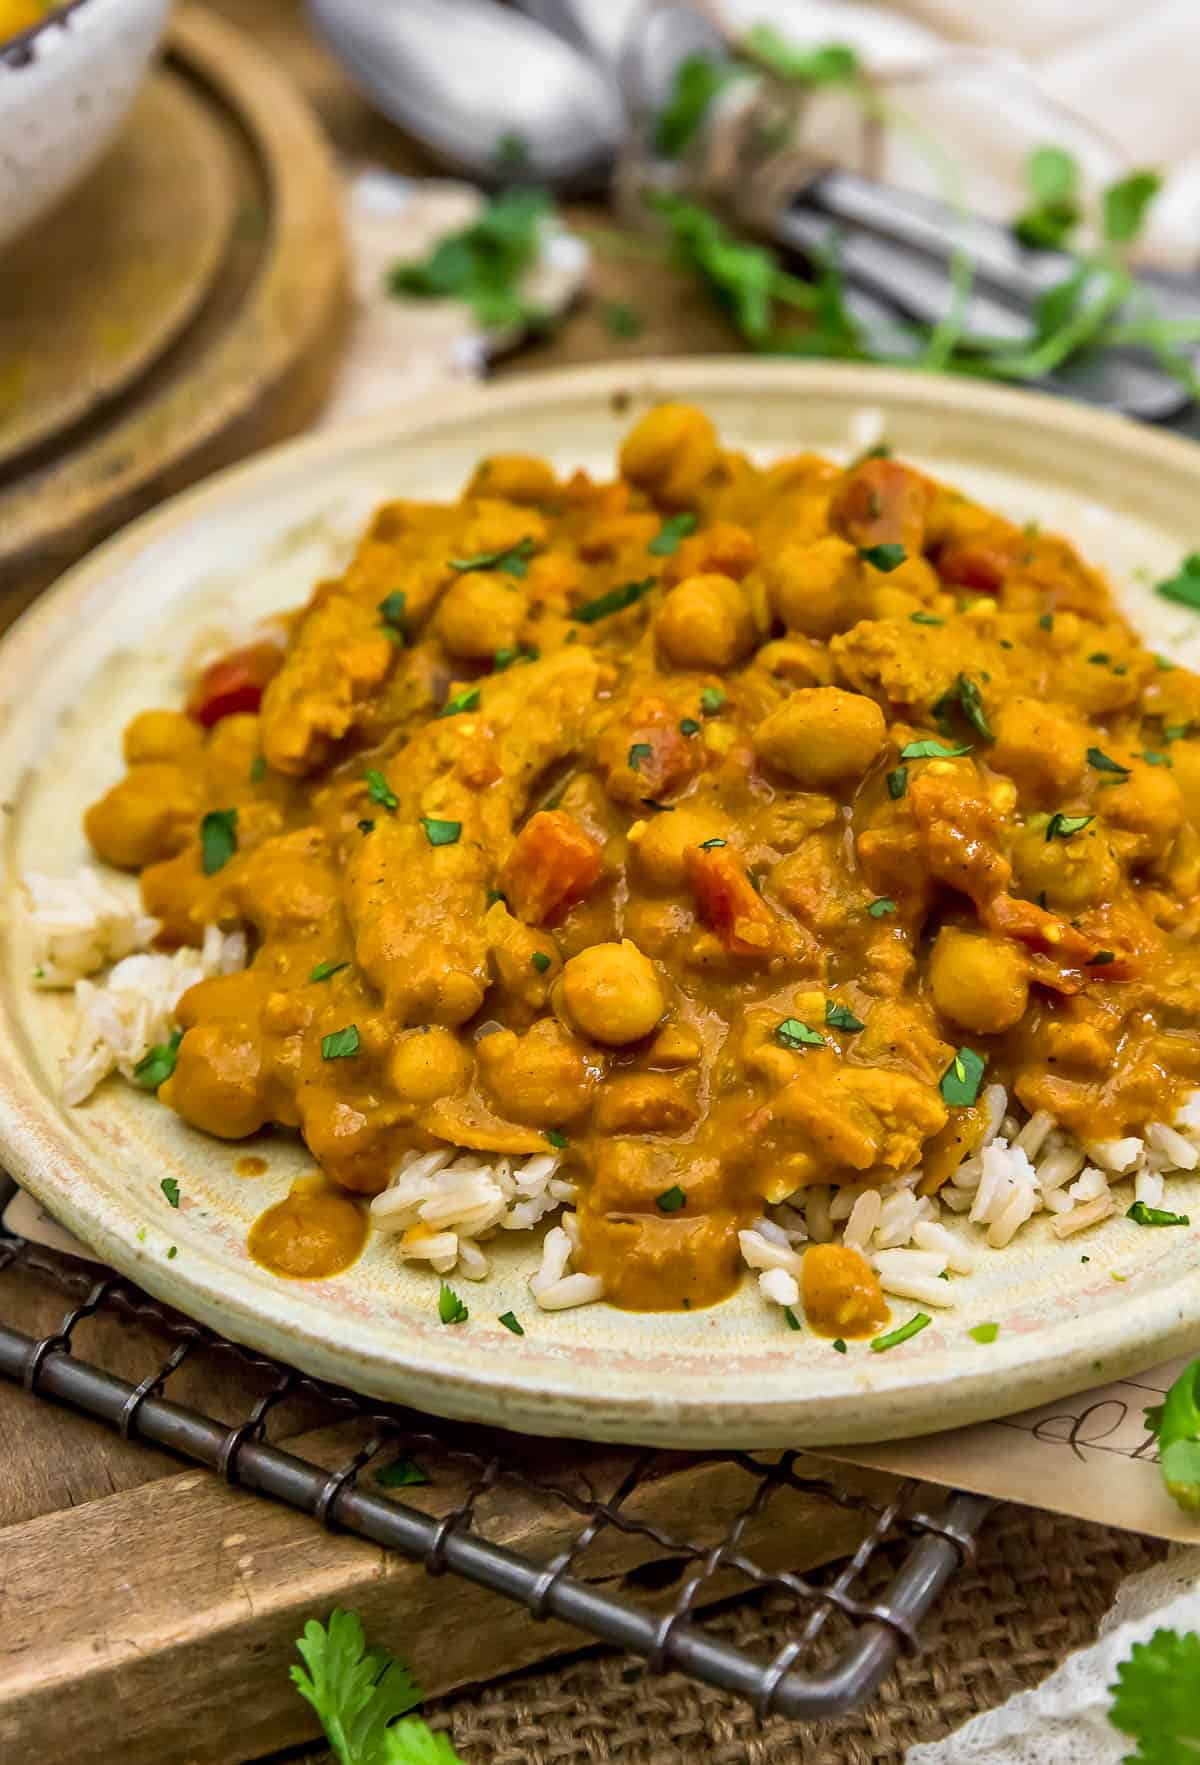 Easy Vegan Indian “Butter” Chickpeas ladled over rice